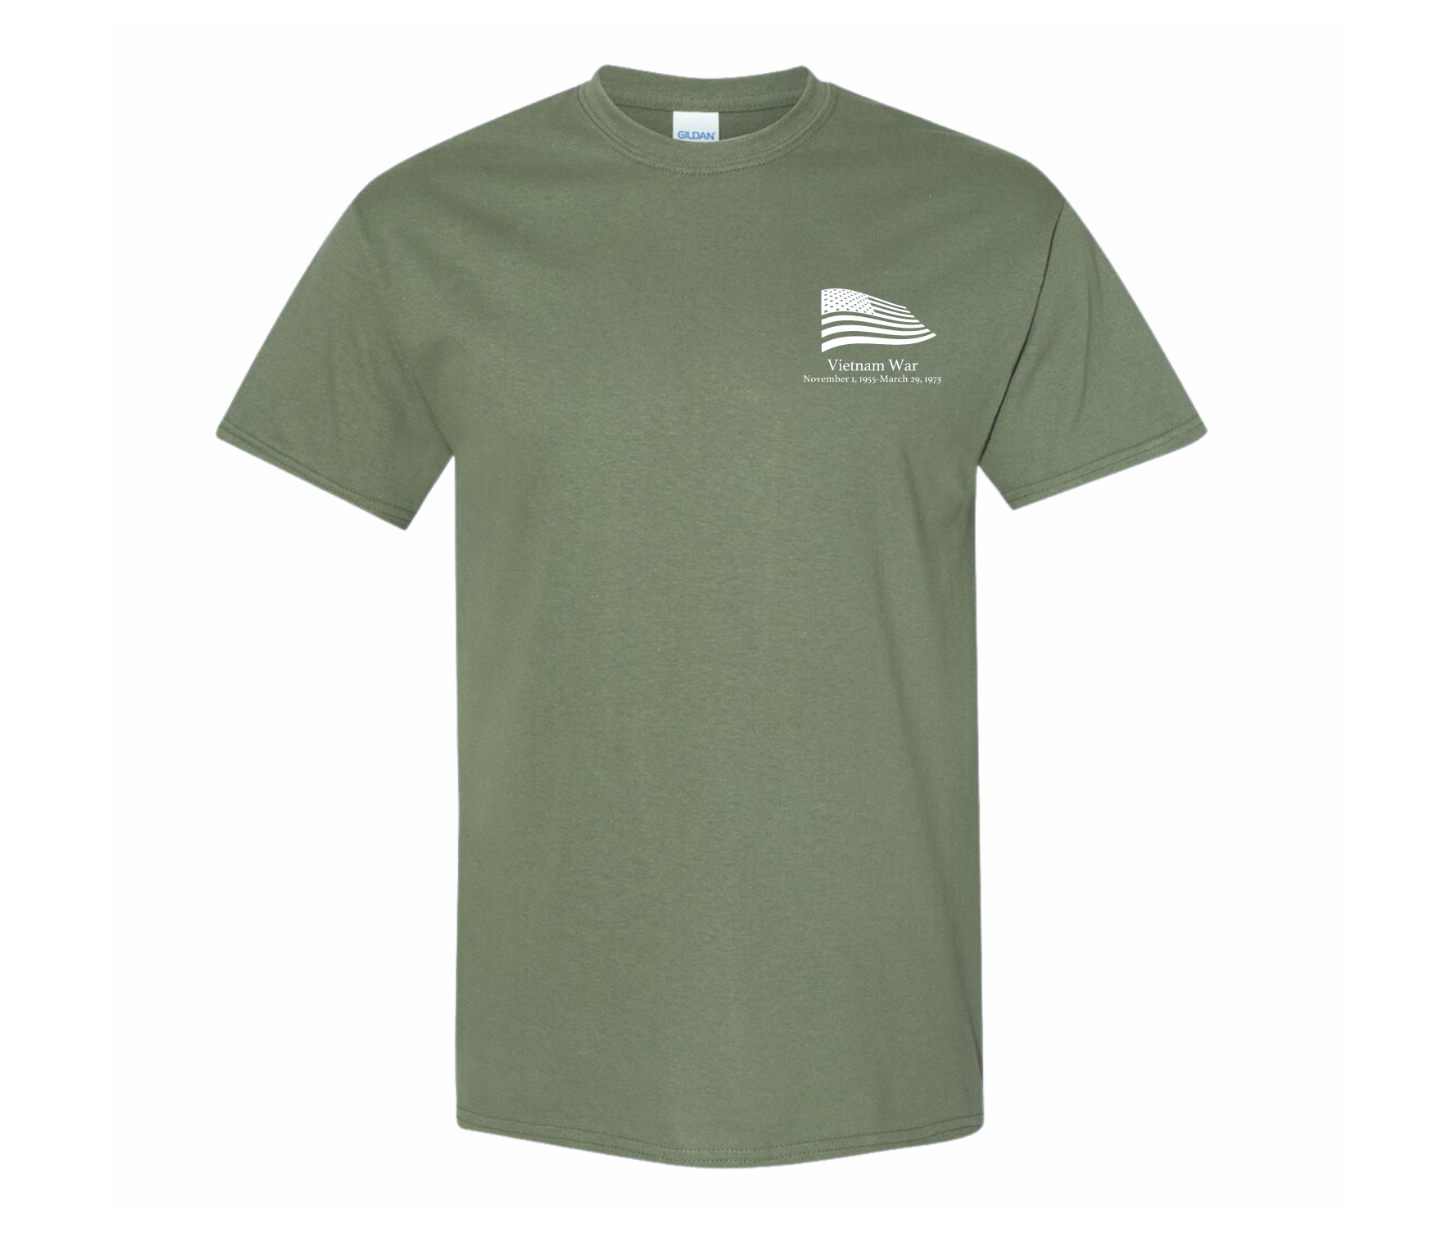 Vietnam War Commemorative T-Shirt